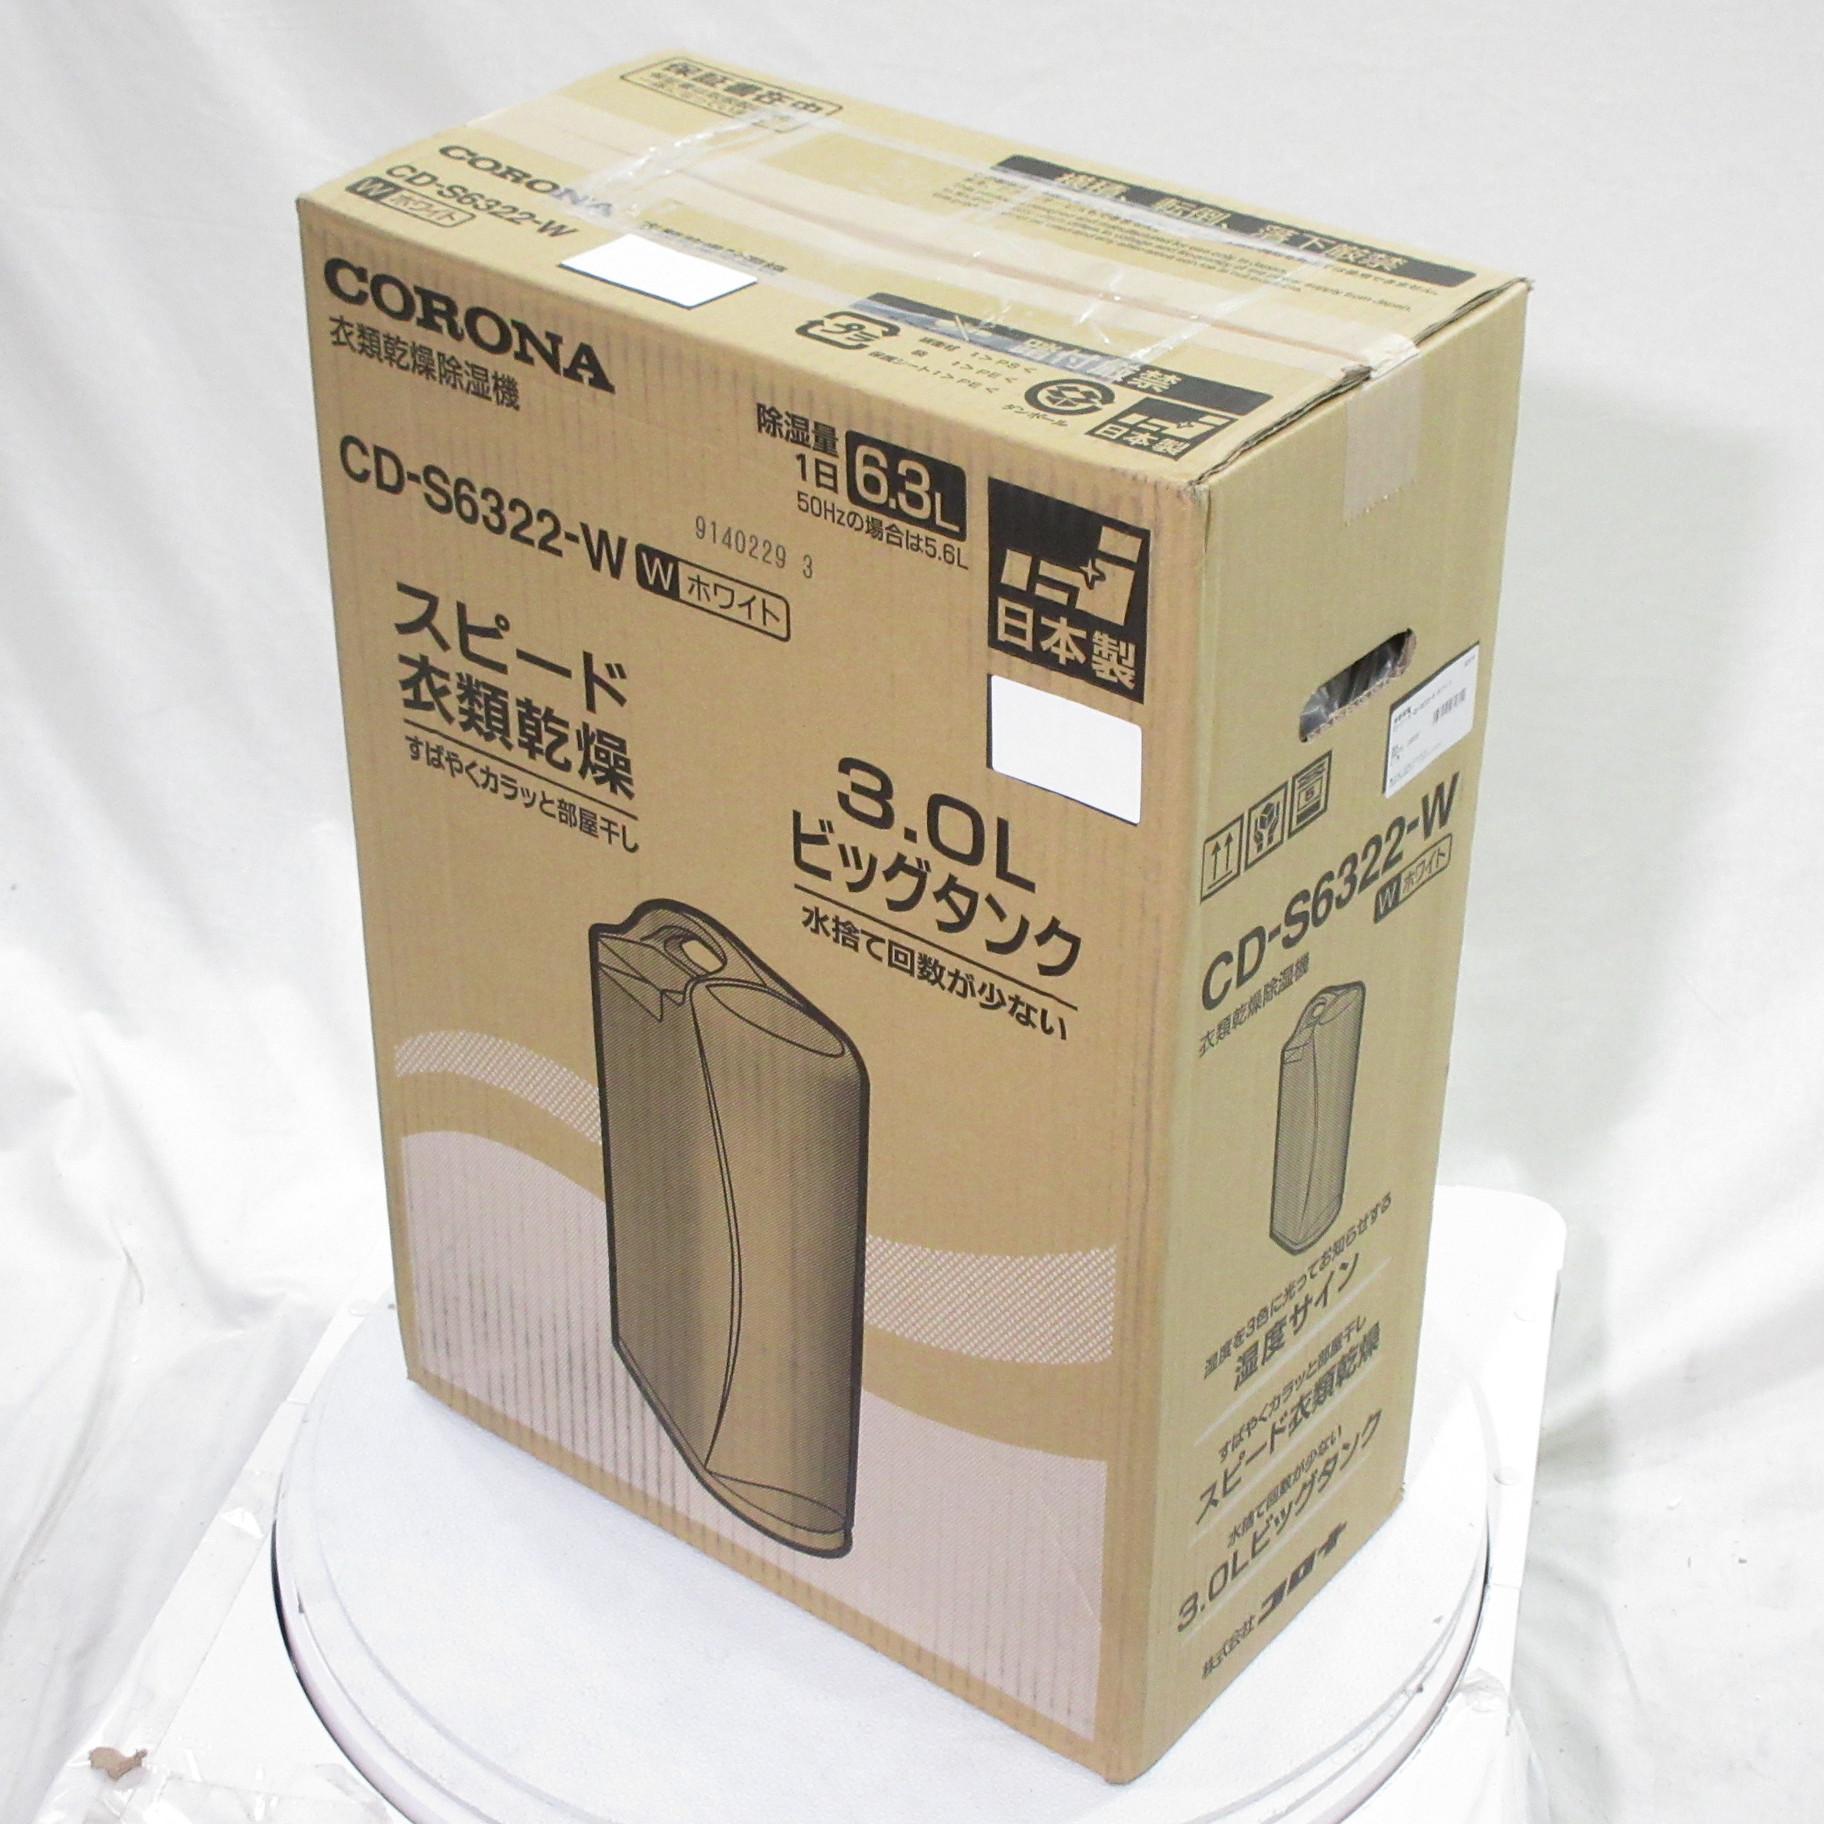 CORONA コロナ 衣類乾燥除湿機 CD-S6322-W コンプレッサー方式